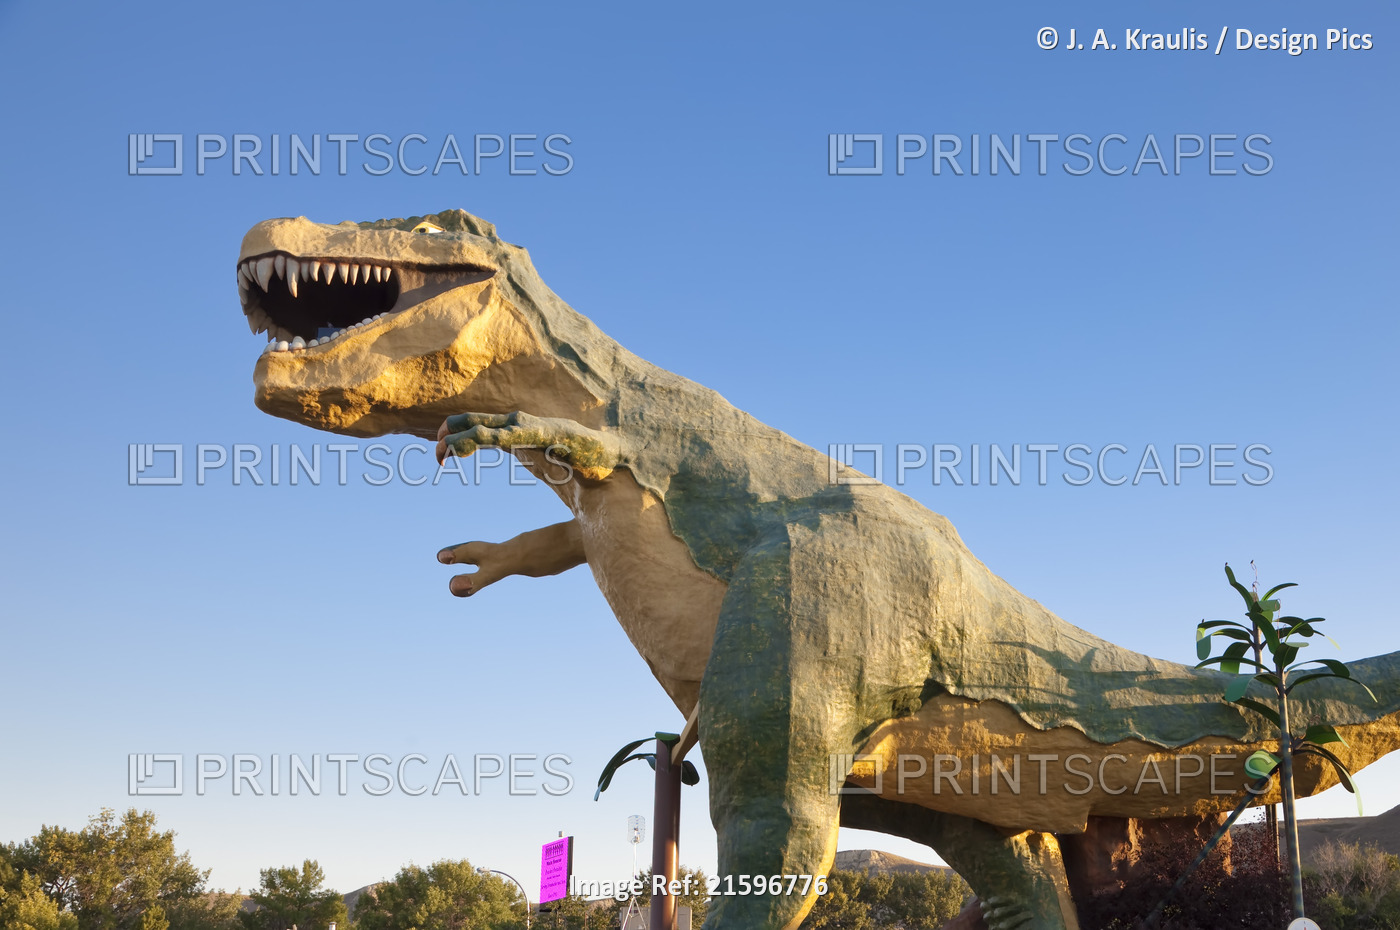 World's Largest Dinosaur, Drumheller, Alberta, Canada